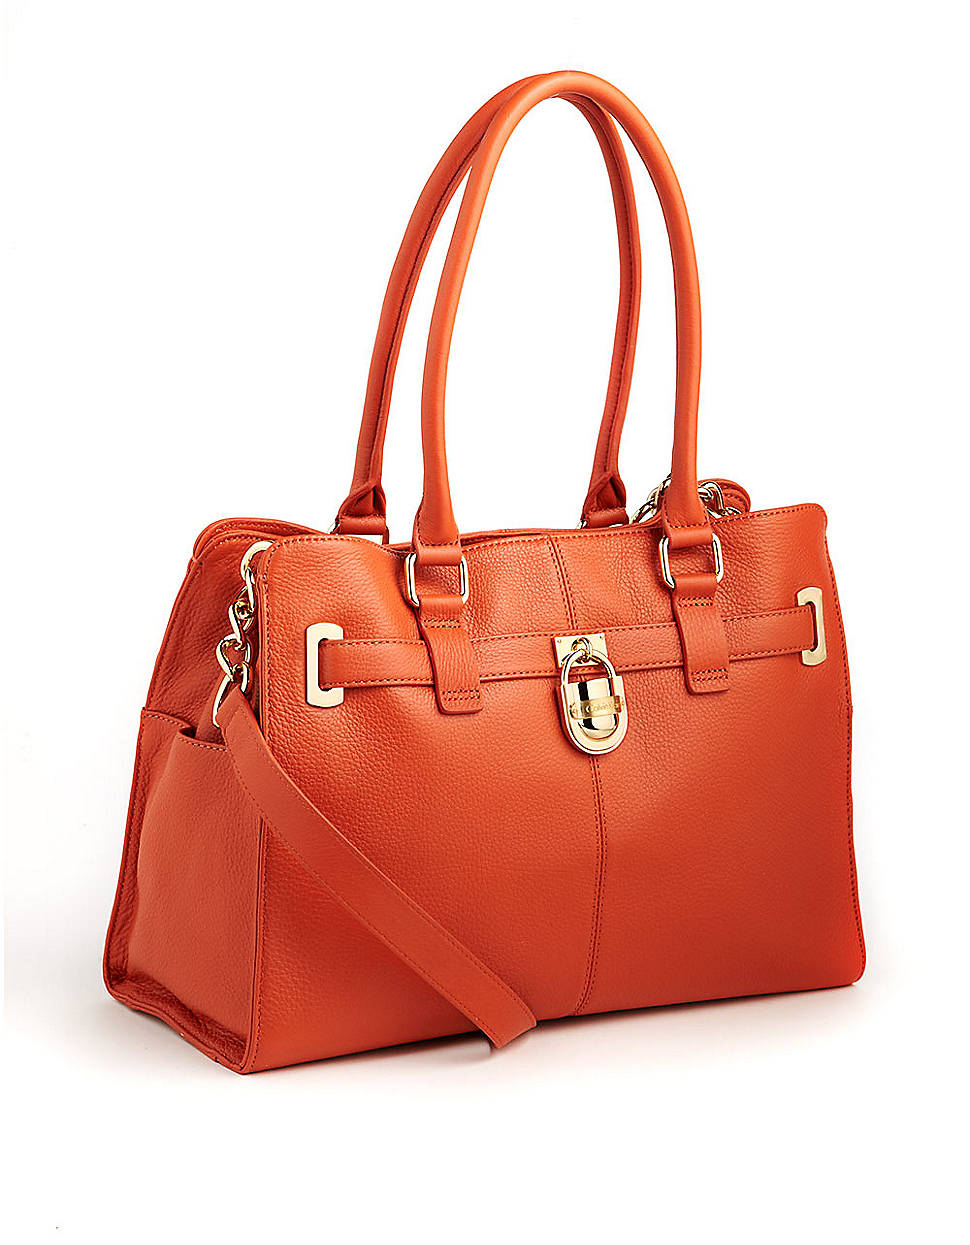 Calvin klein Leather Satchel Bag in Orange | Lyst